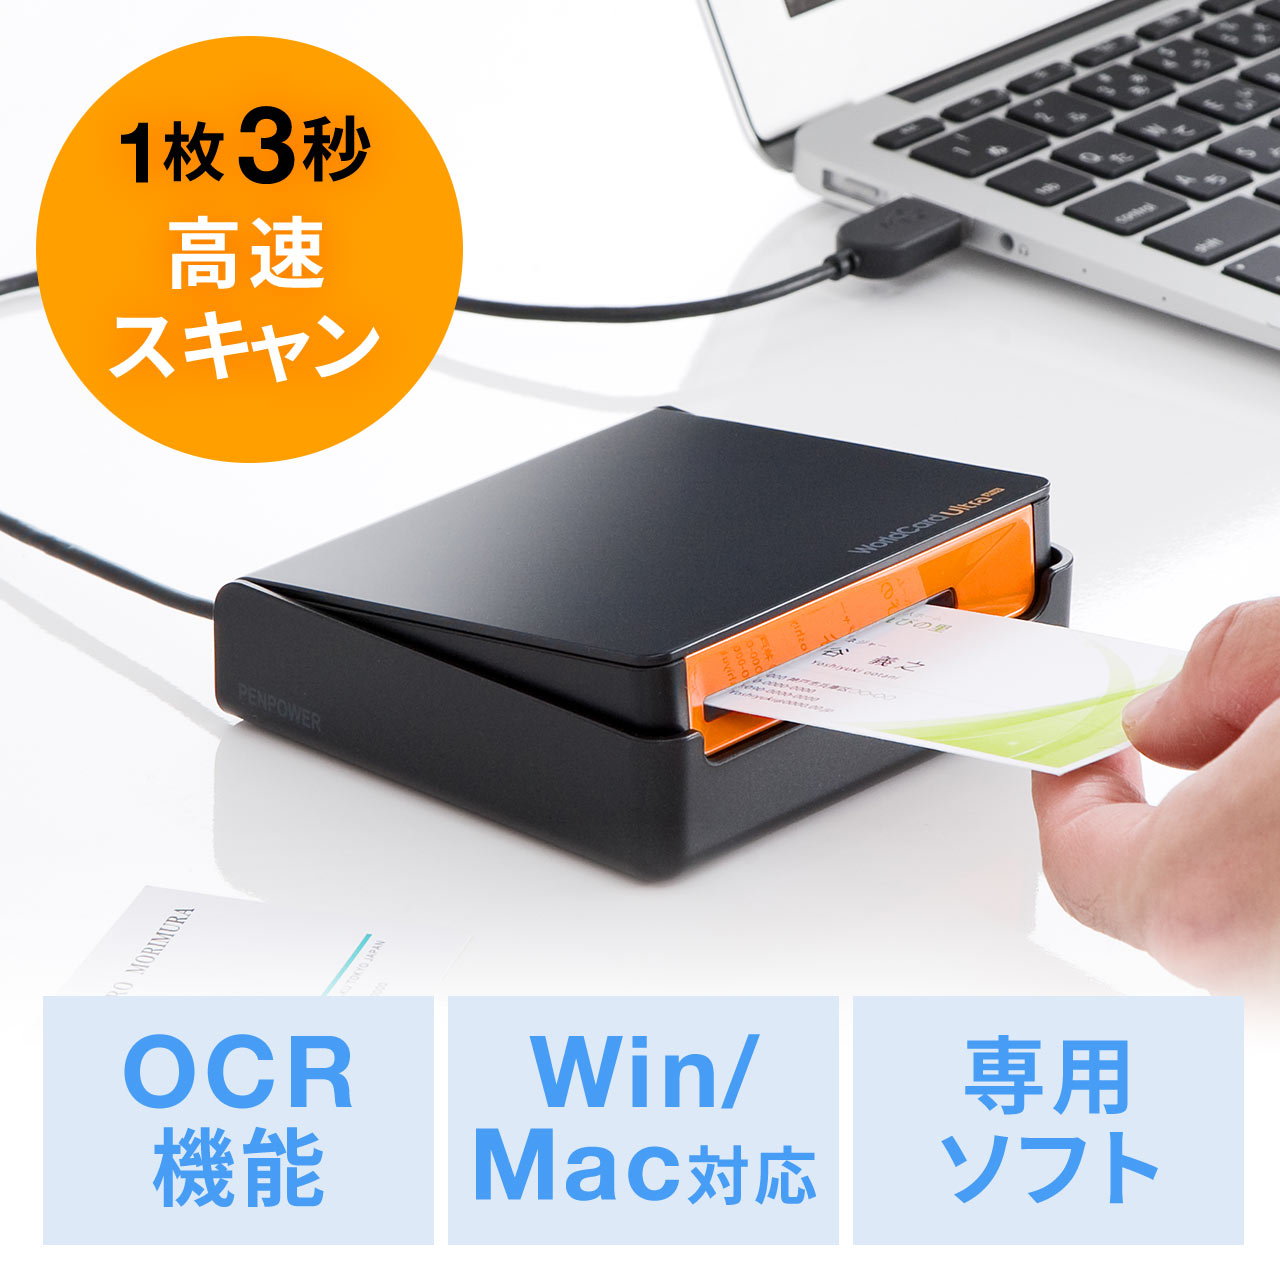 USB名刺管理スキャナ 1枚3秒連続スキャン OCR搭載 Win Mac対応 Worldcard Ultra Plus 400-SCN005N